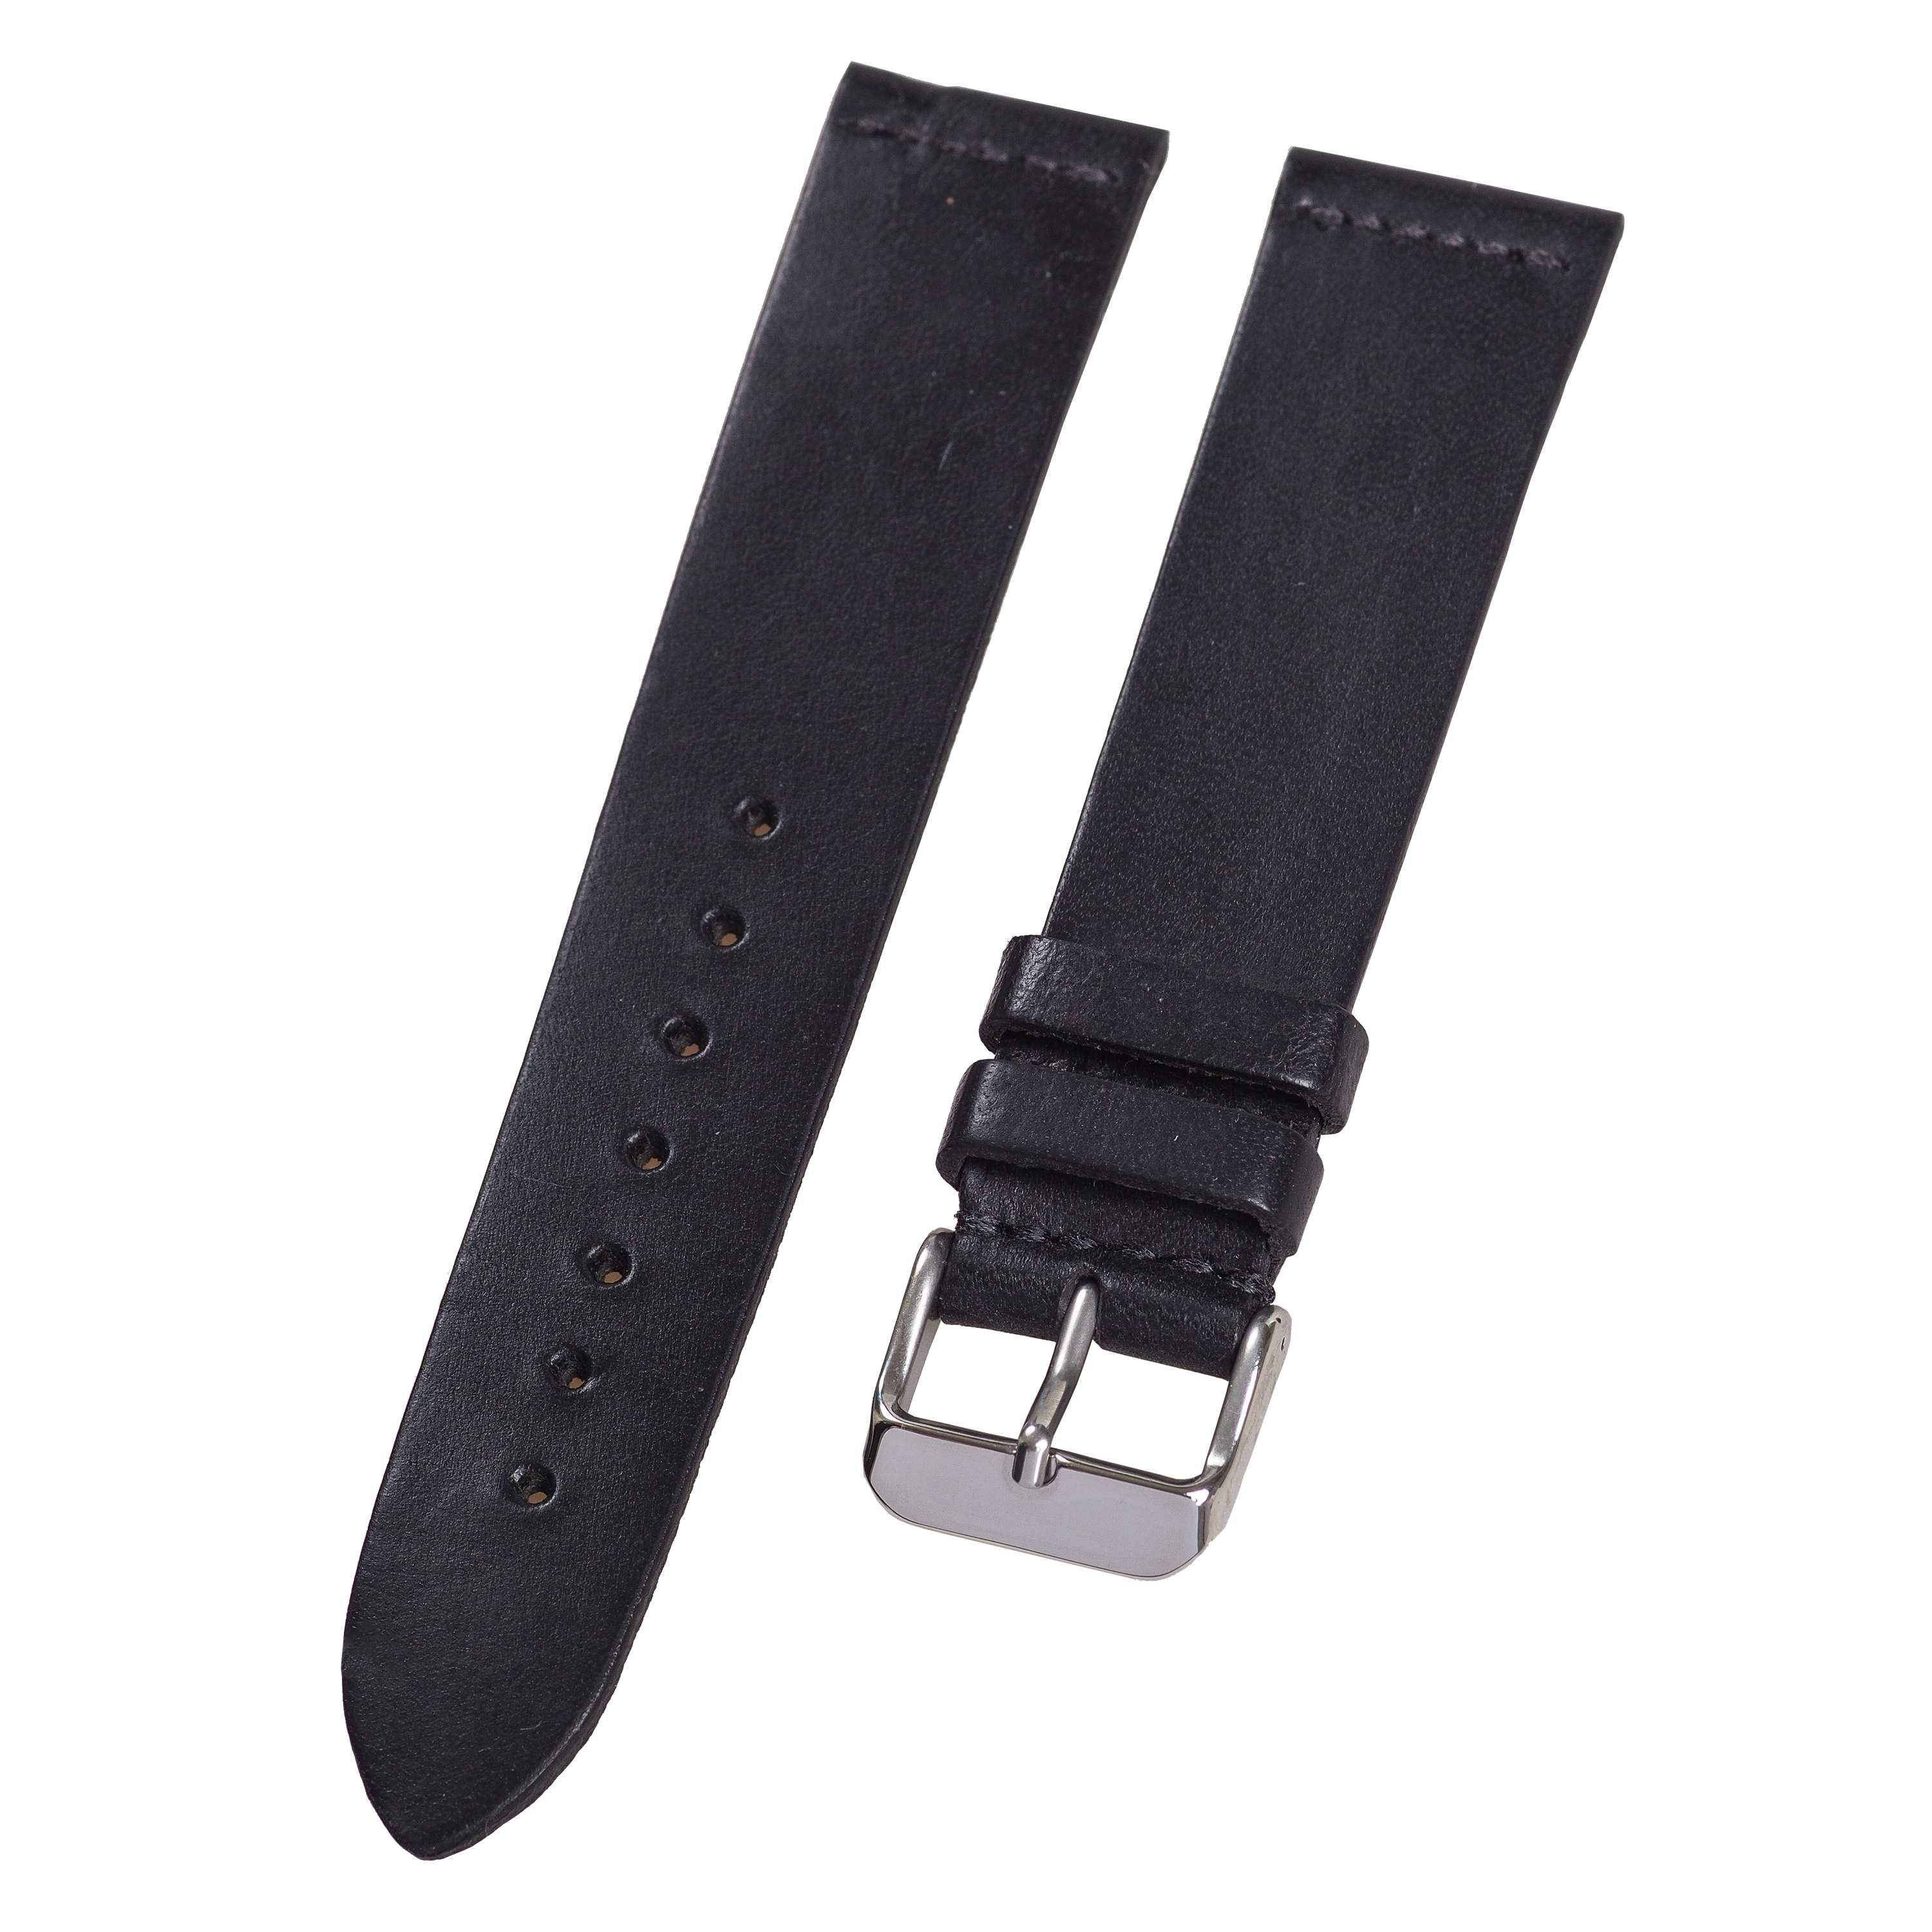 Ashland Leather Co. Leather Apple Watch Band